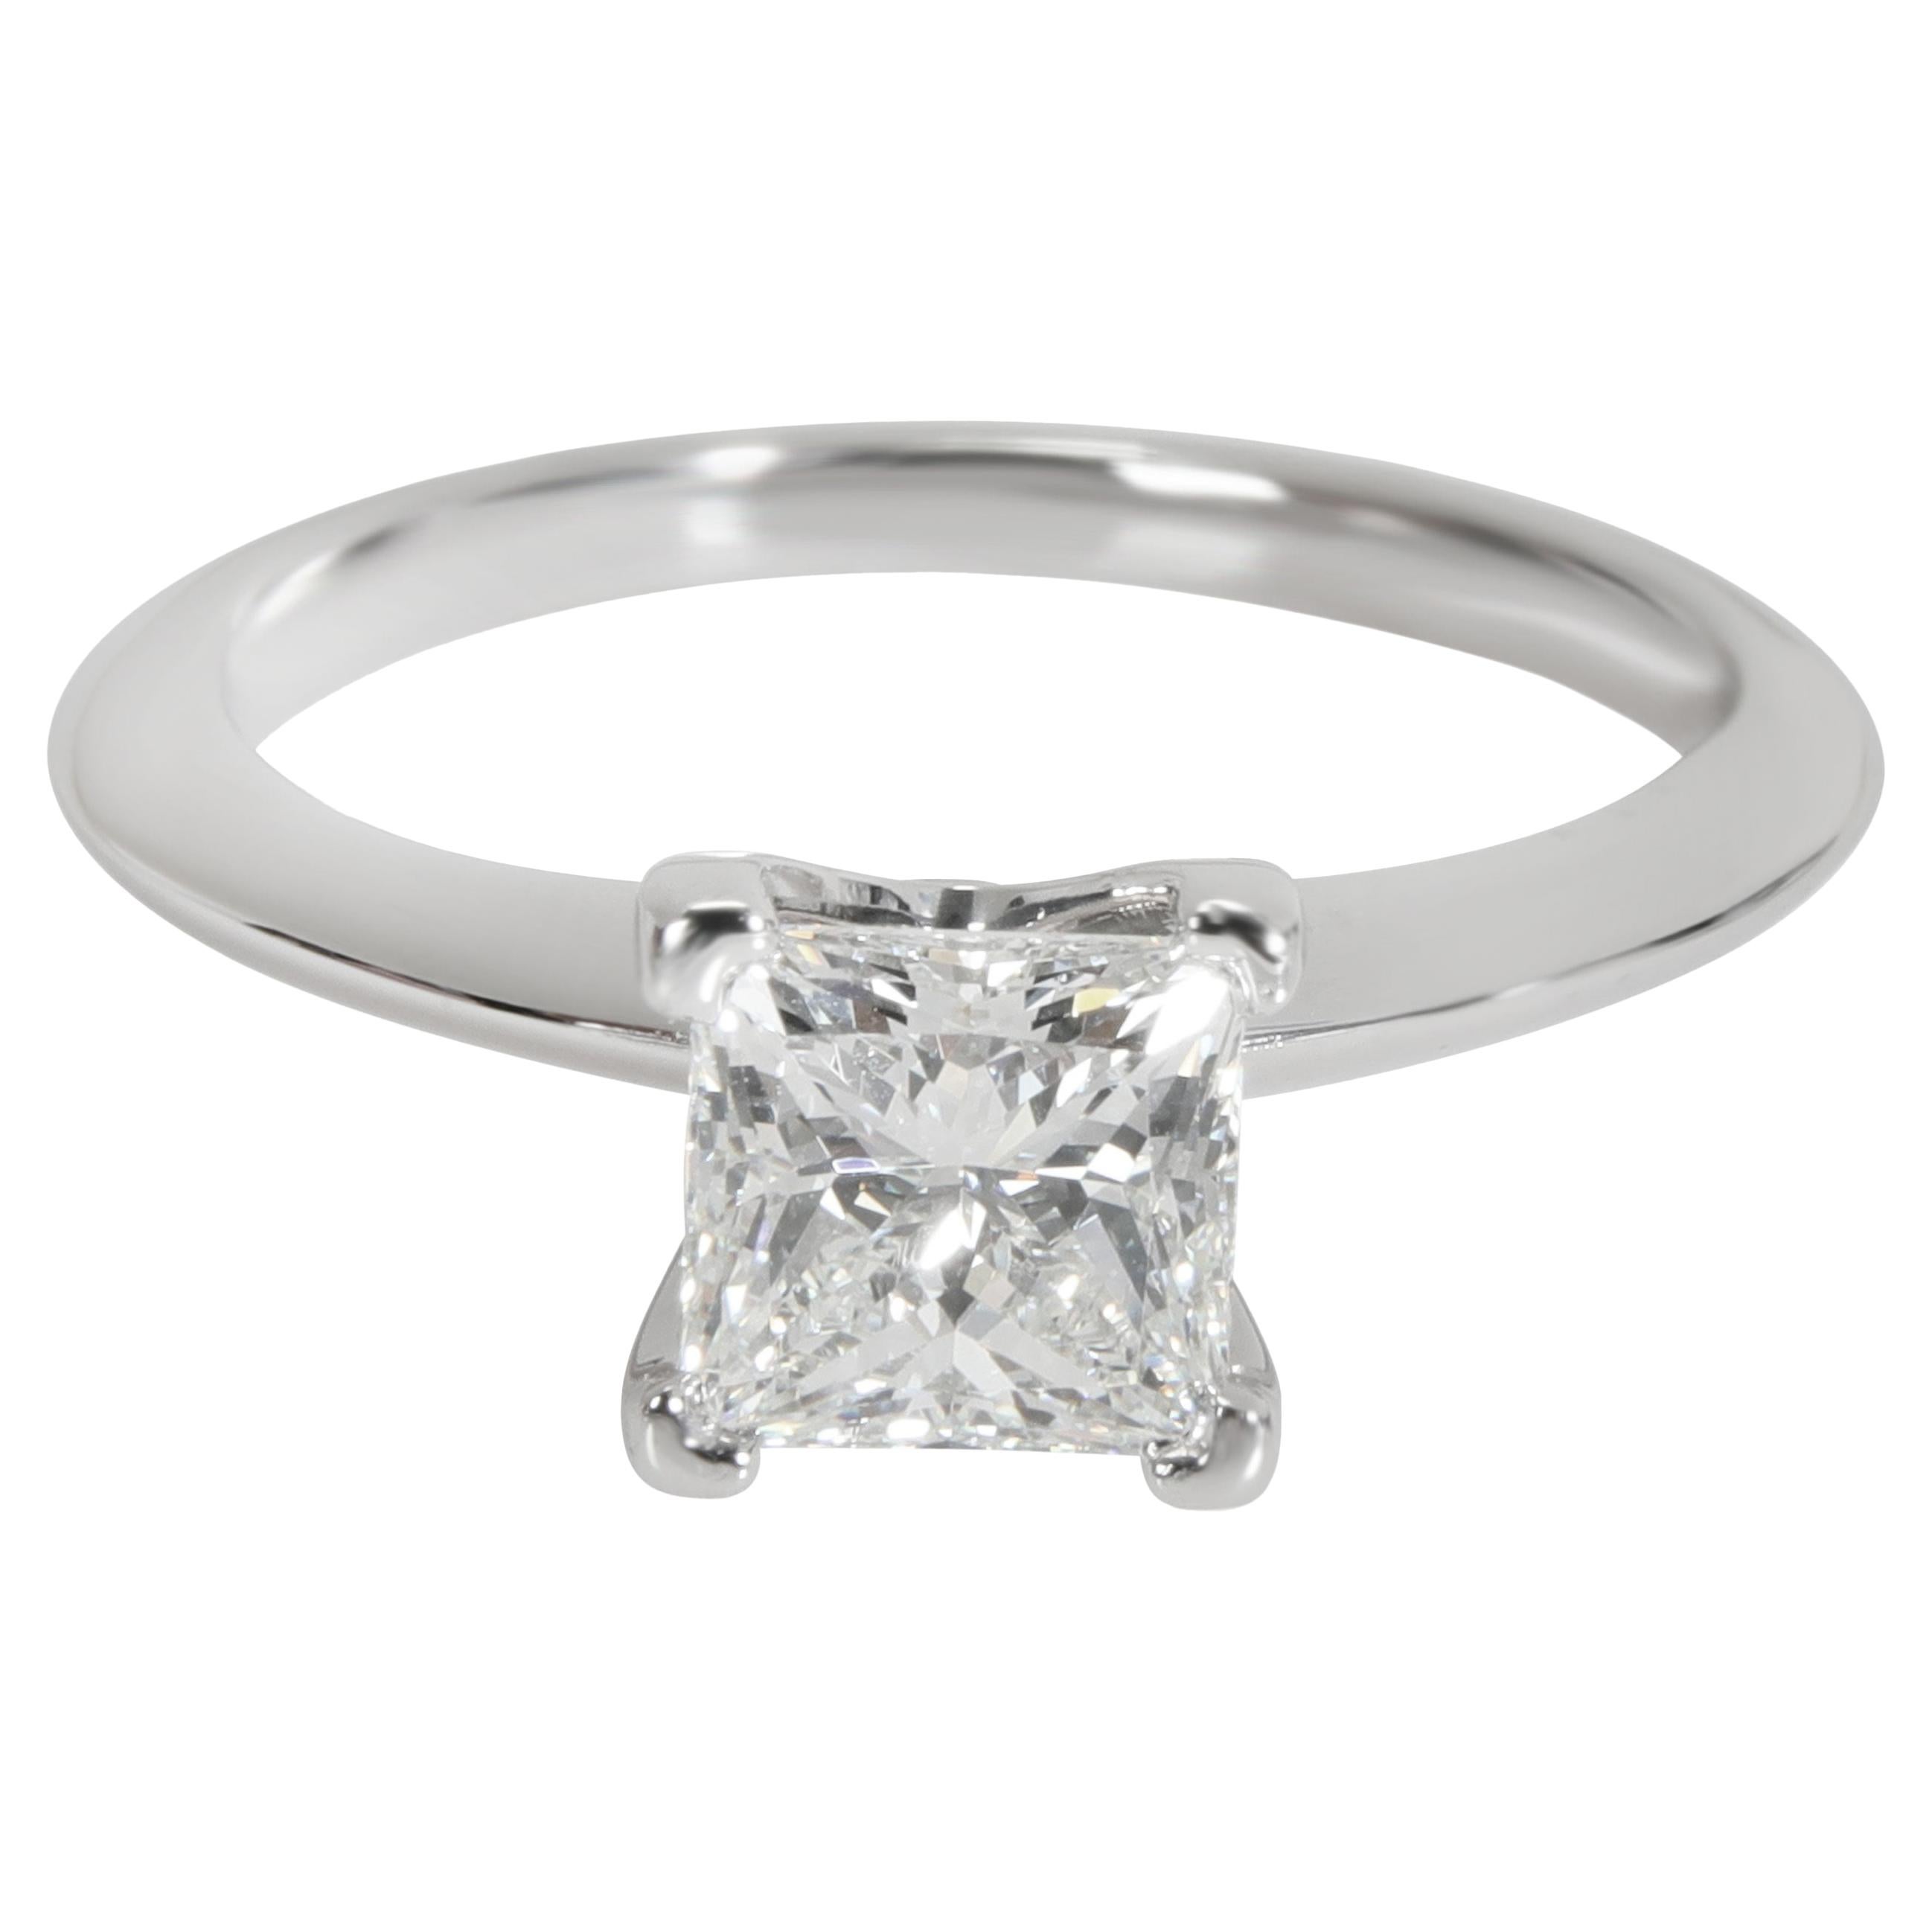 Tiffany & Co. Princess Diamond Engagement Ring in Platinum G VVS2 1.01 CTW